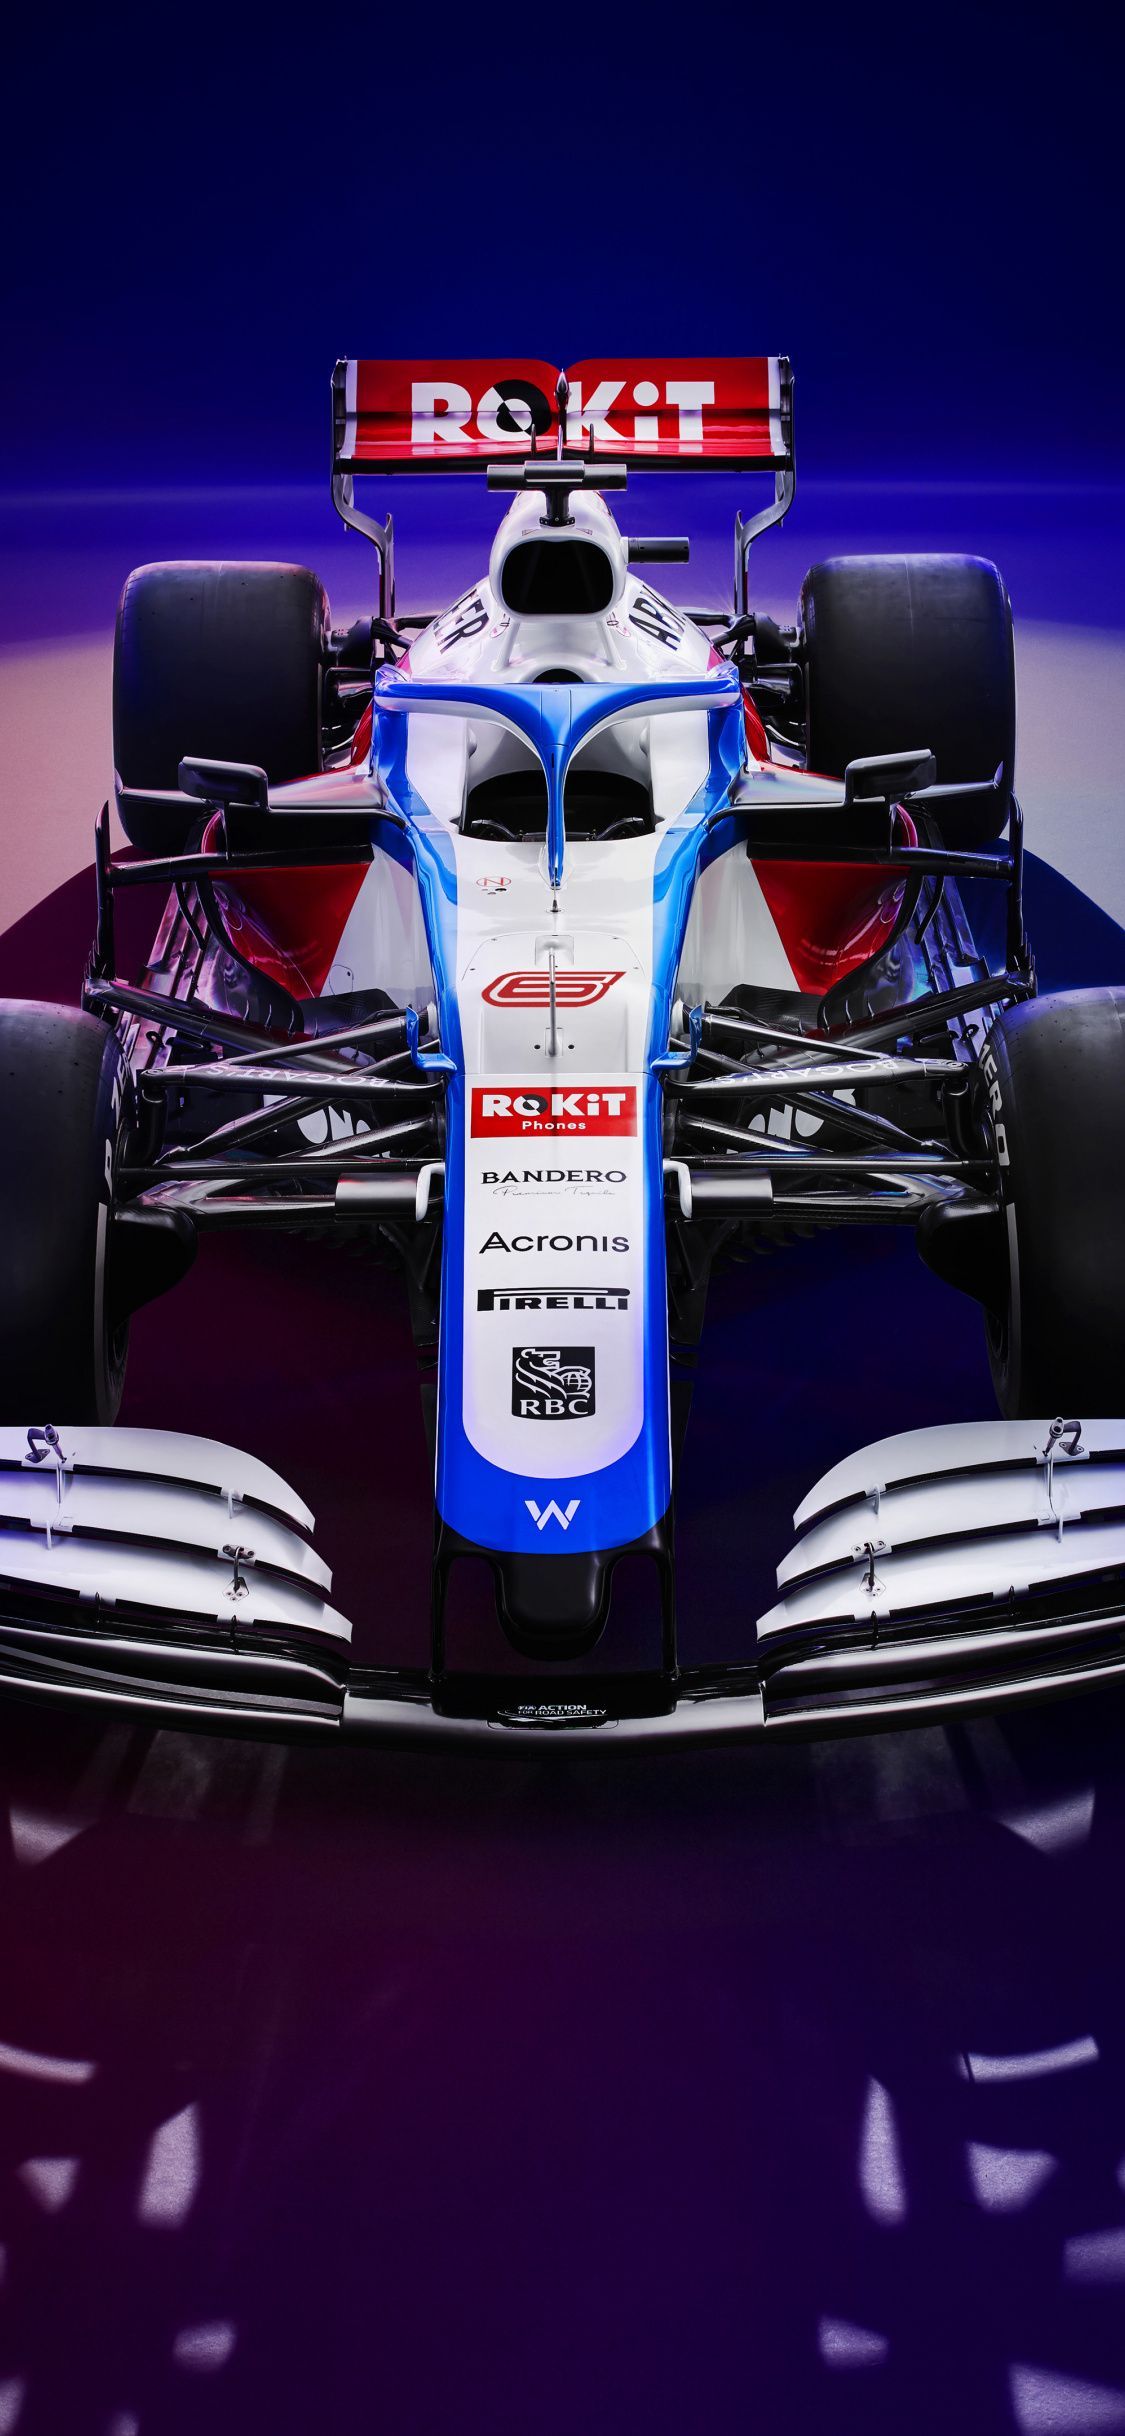 Williams FW F1 car wallpaper. Samsung